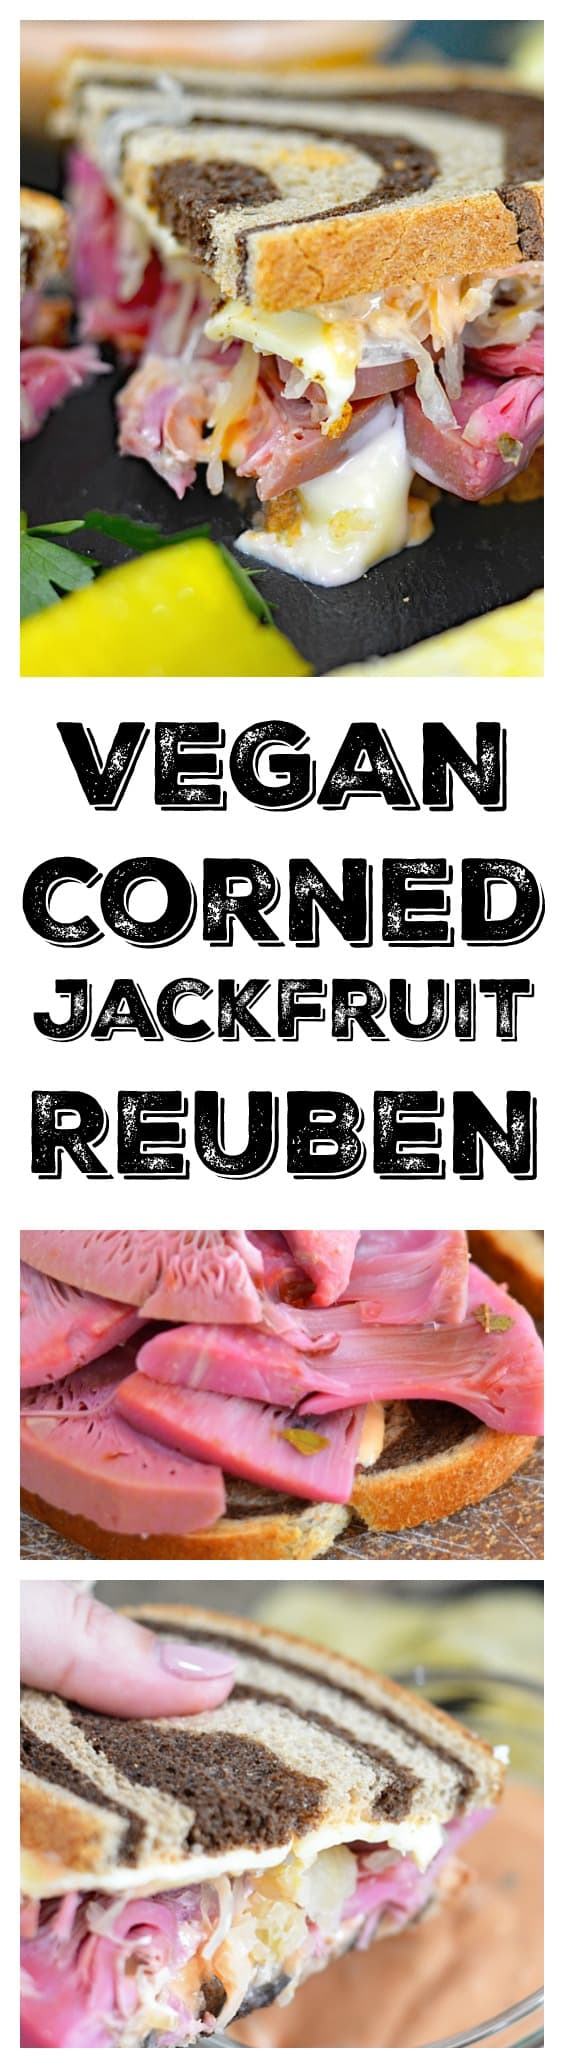 VEGAN Corned Jackfruit Reuben on Rye With Sauerkraut and Swiss